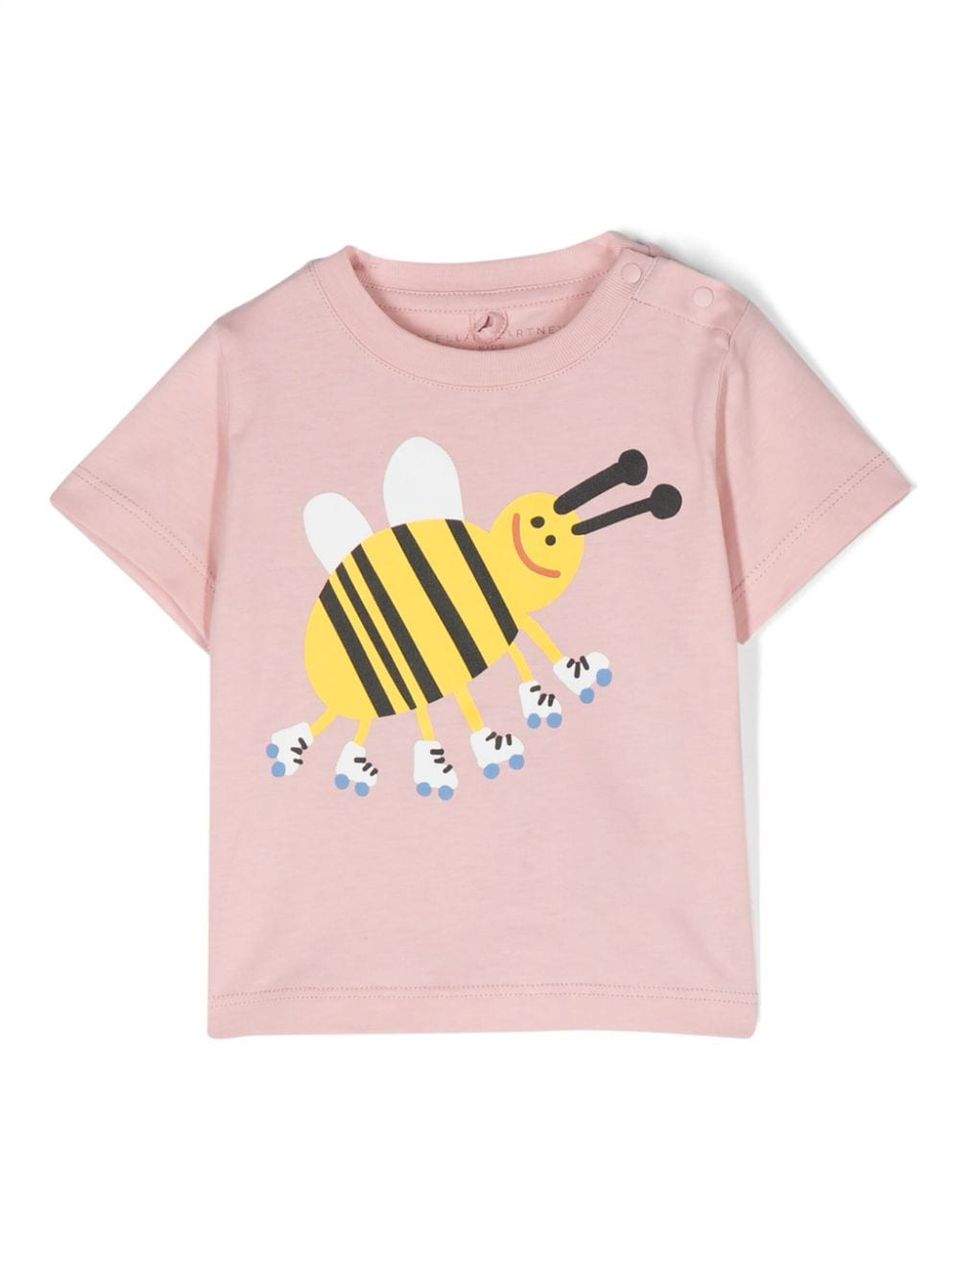 Bee print t-shirt